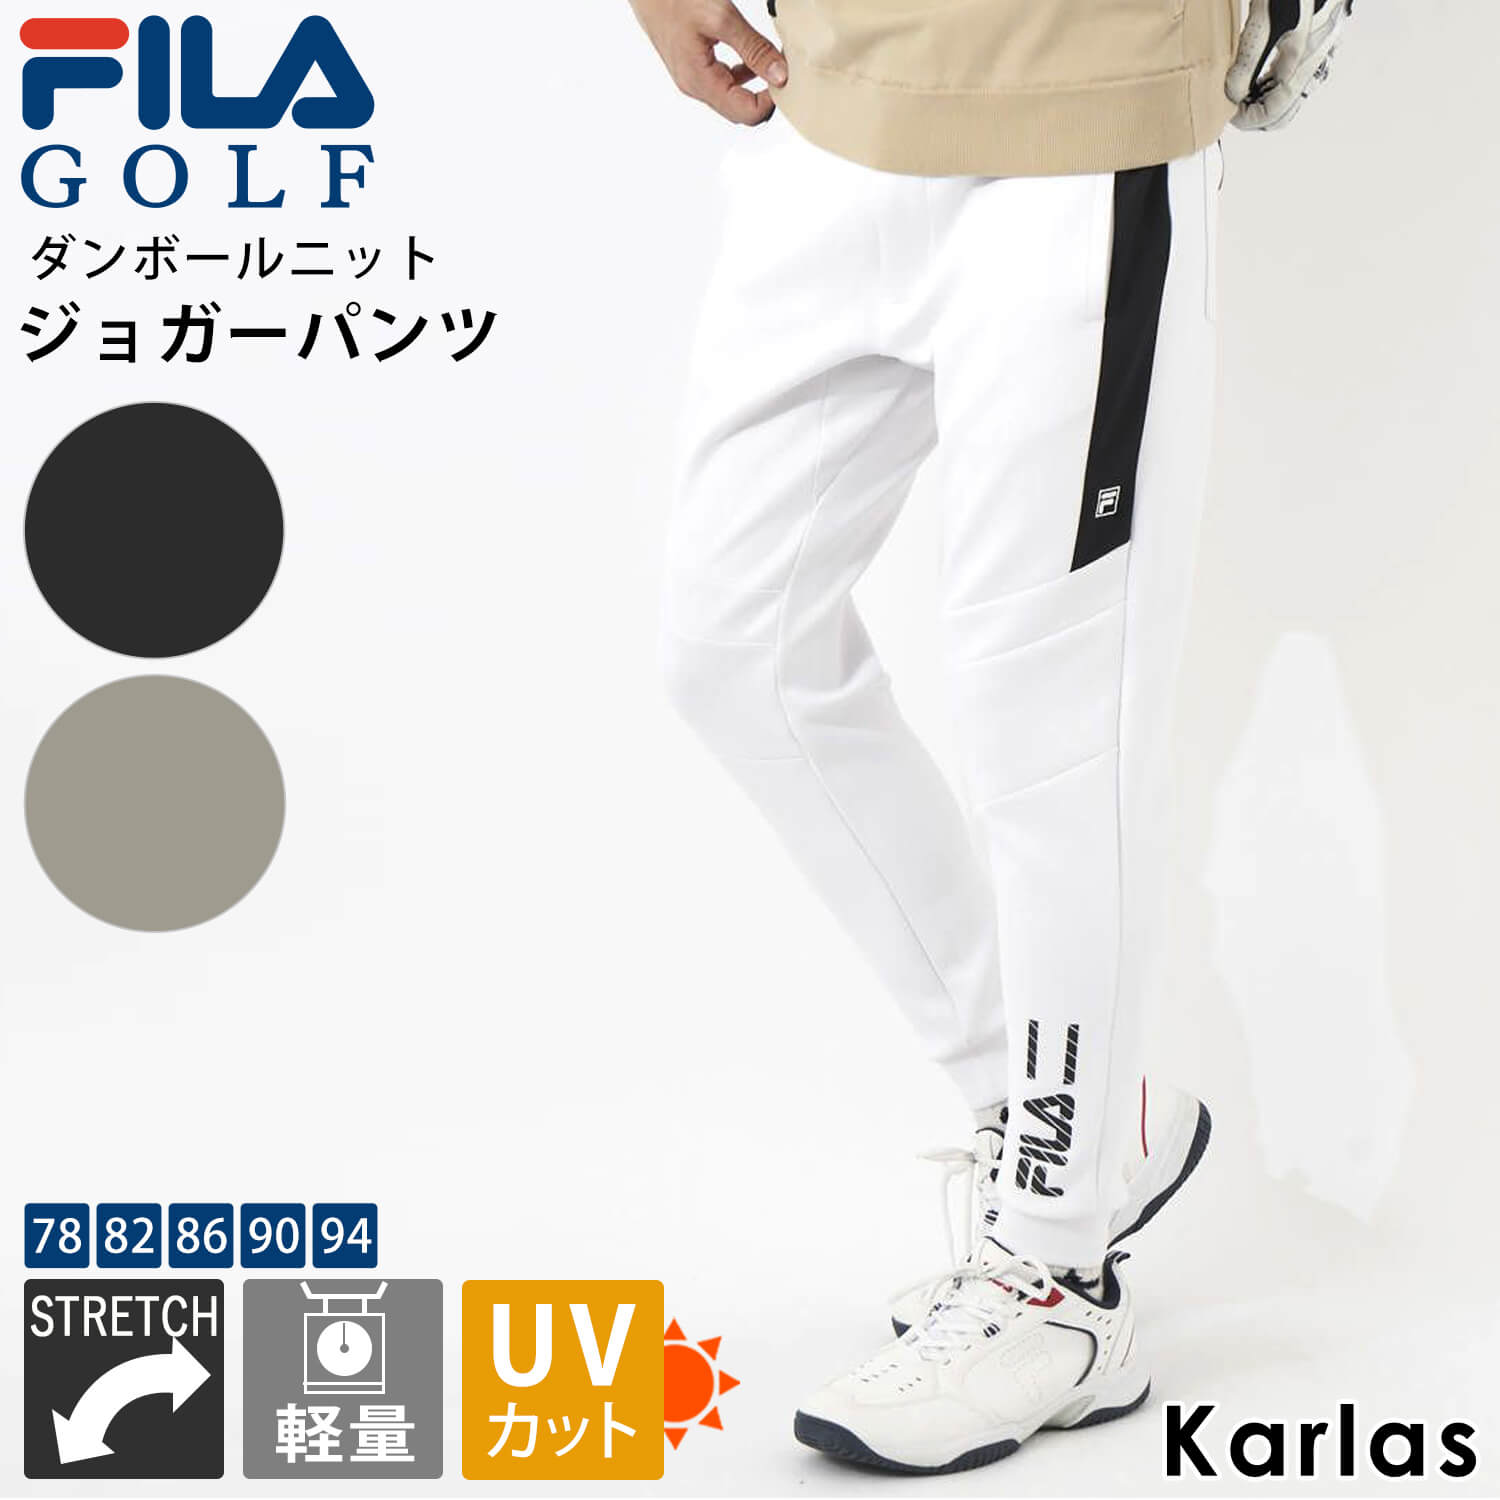 Fila Sport Men039s Golf Pants Size 38x33 Black No Slip Waistband Mesh  Pockets  eBay